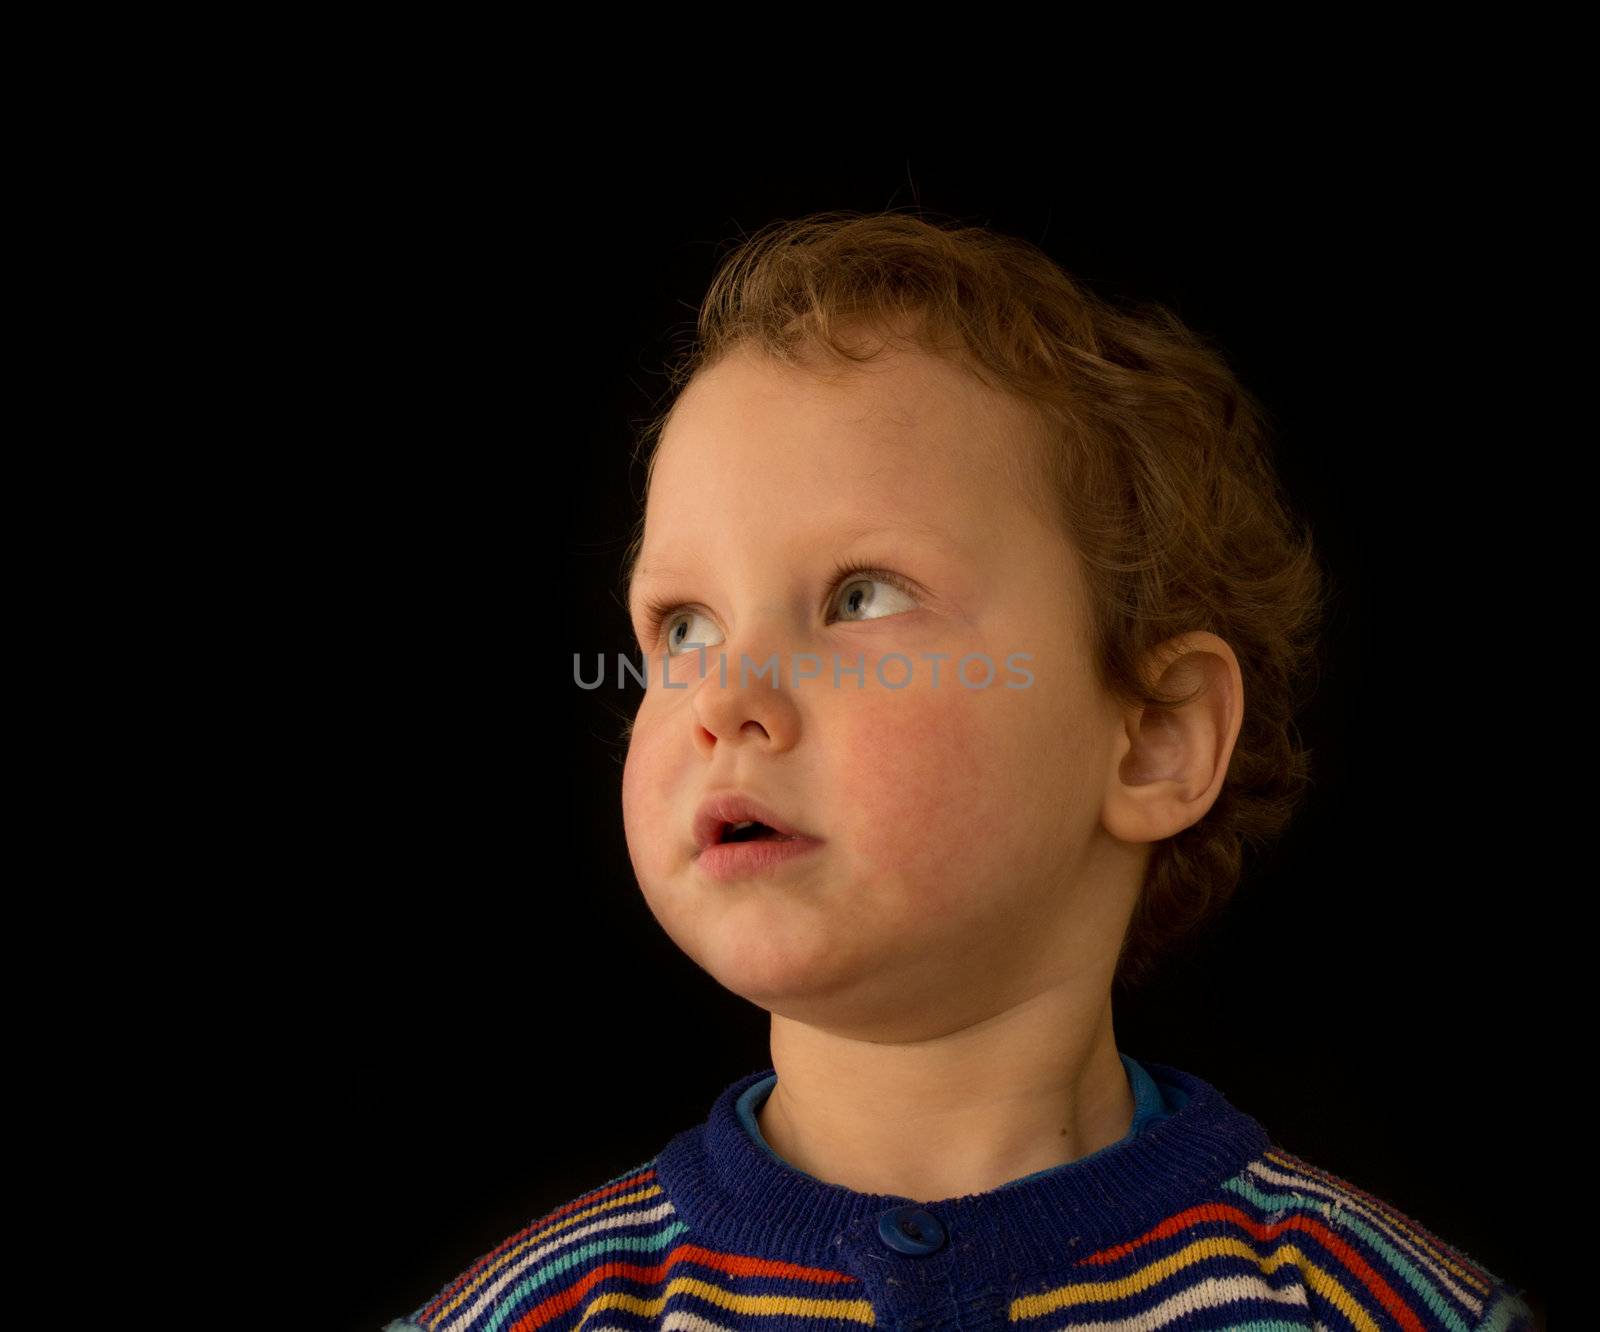 a portrait of a boy on a black background